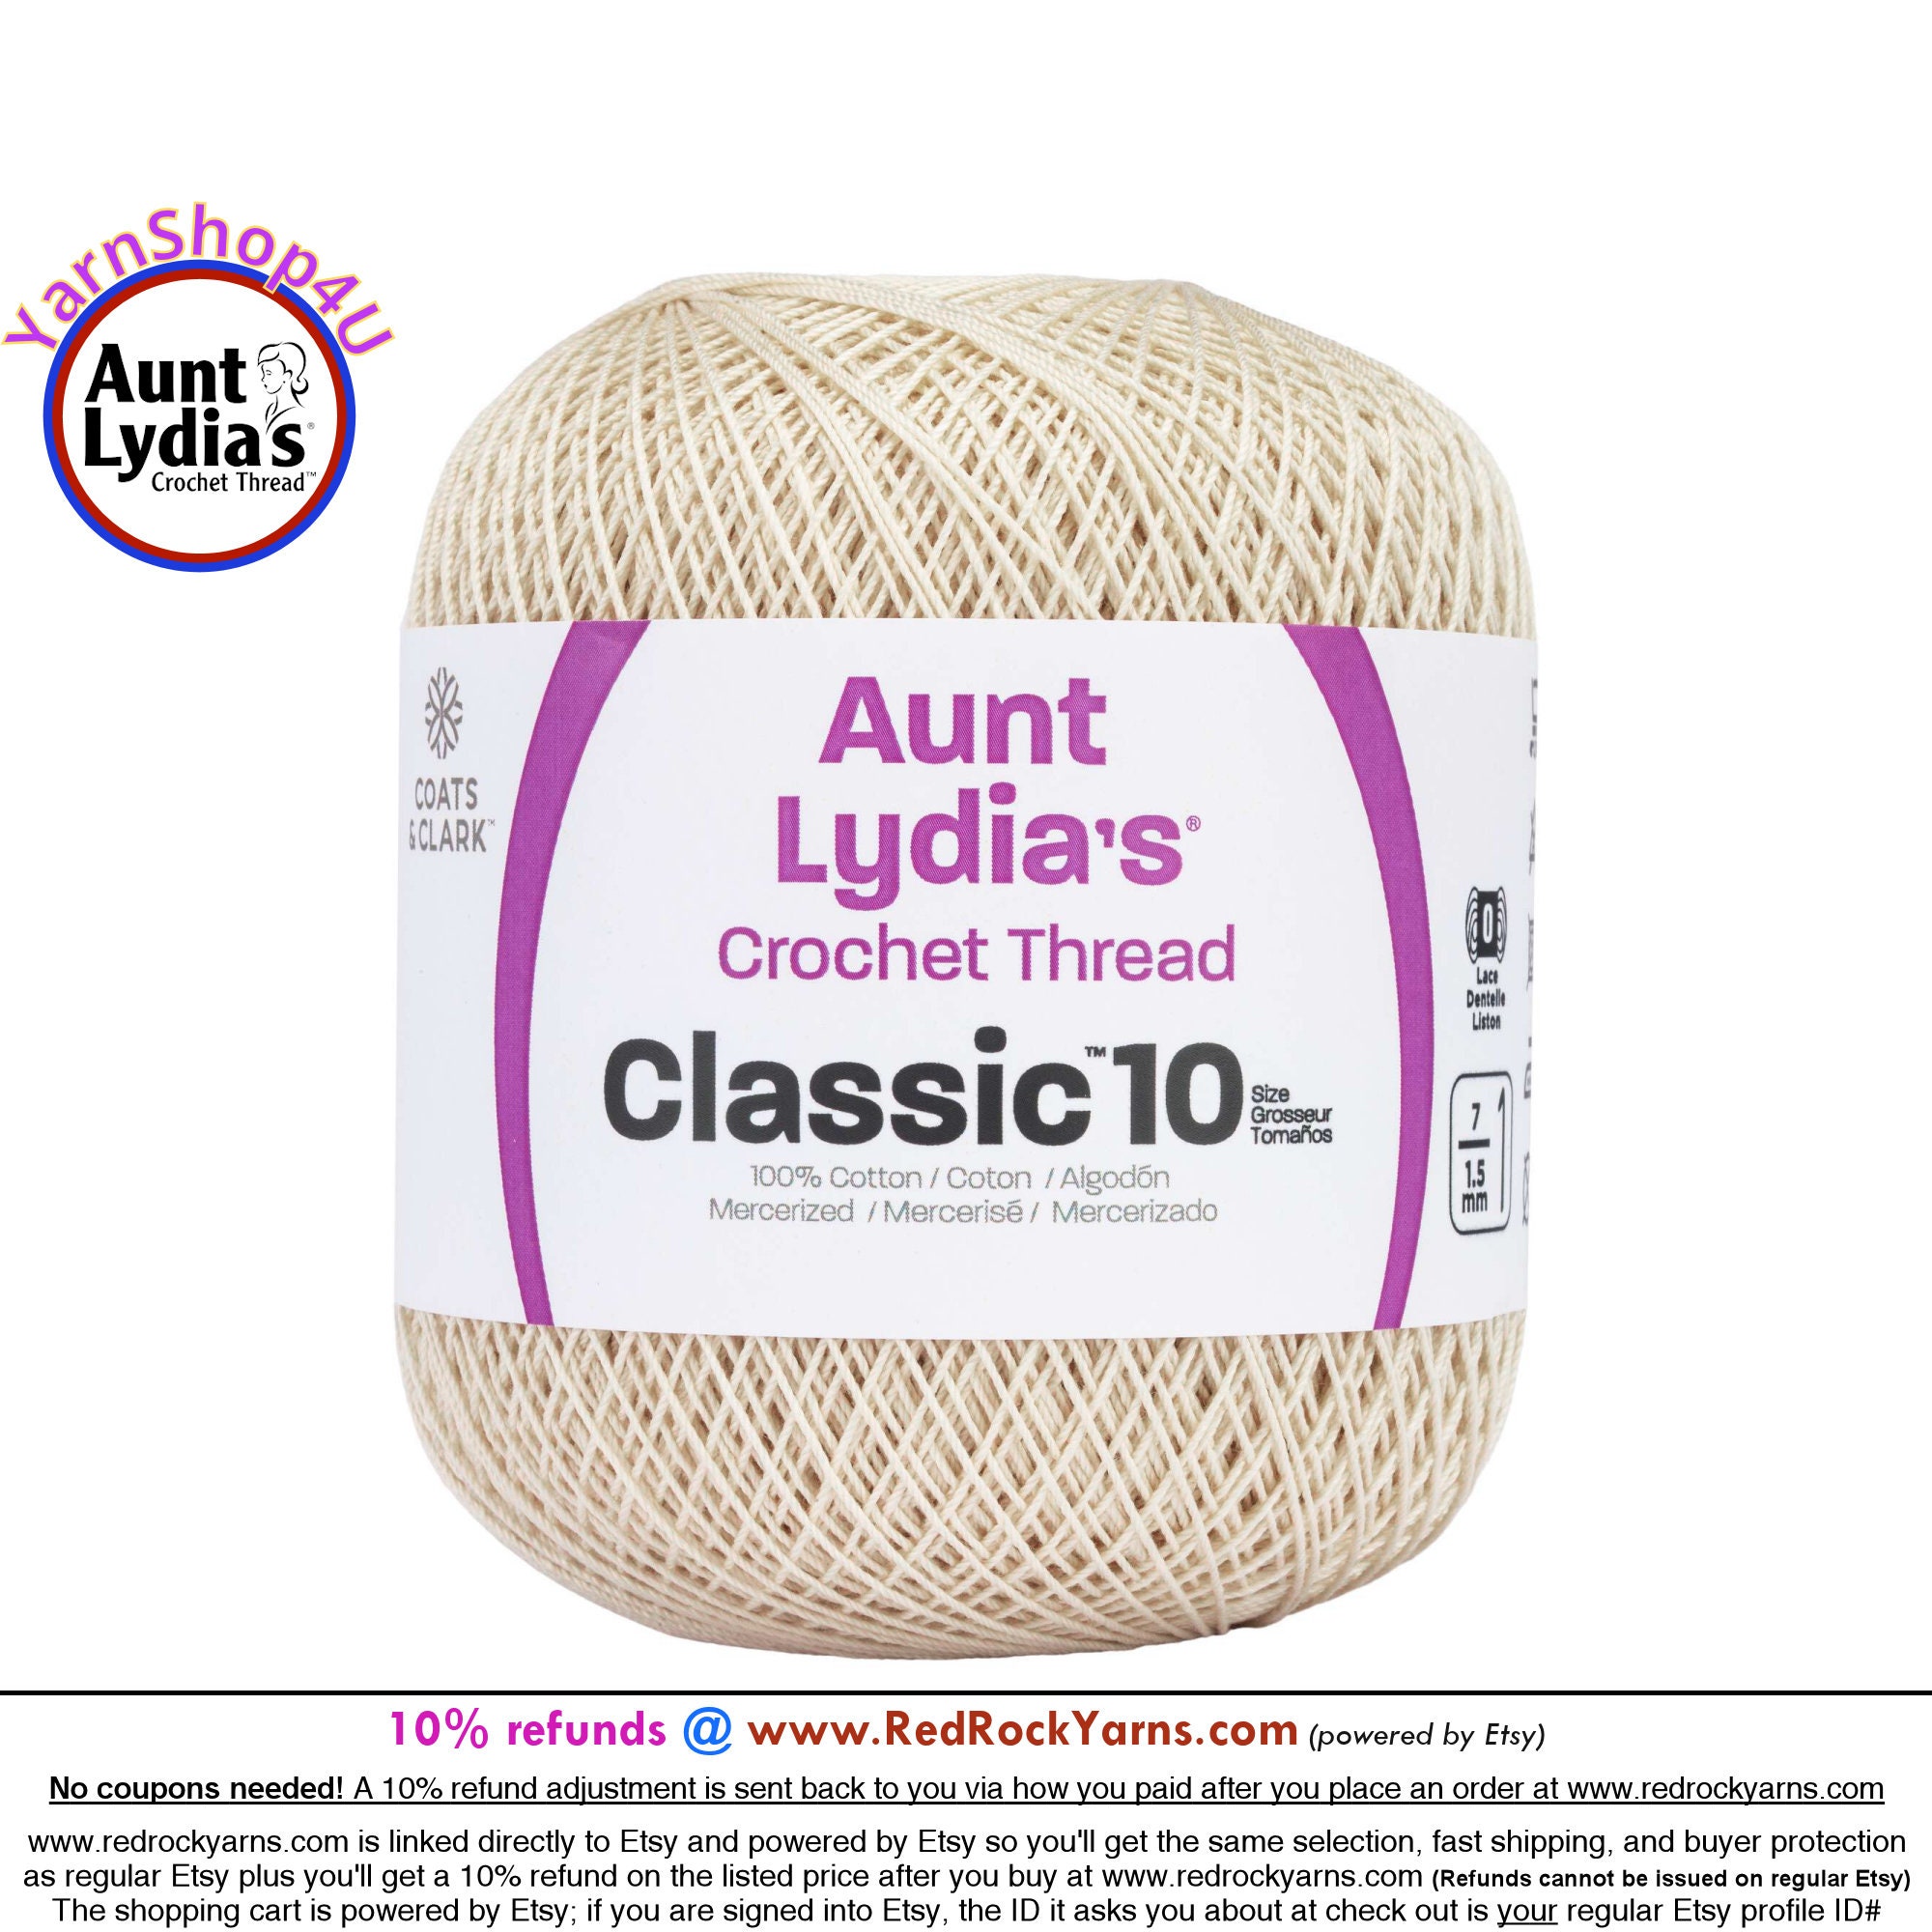 NATURAL Aunt Lydia's Classic 10 Crochet Thread. 400yds. Item 154-0226 